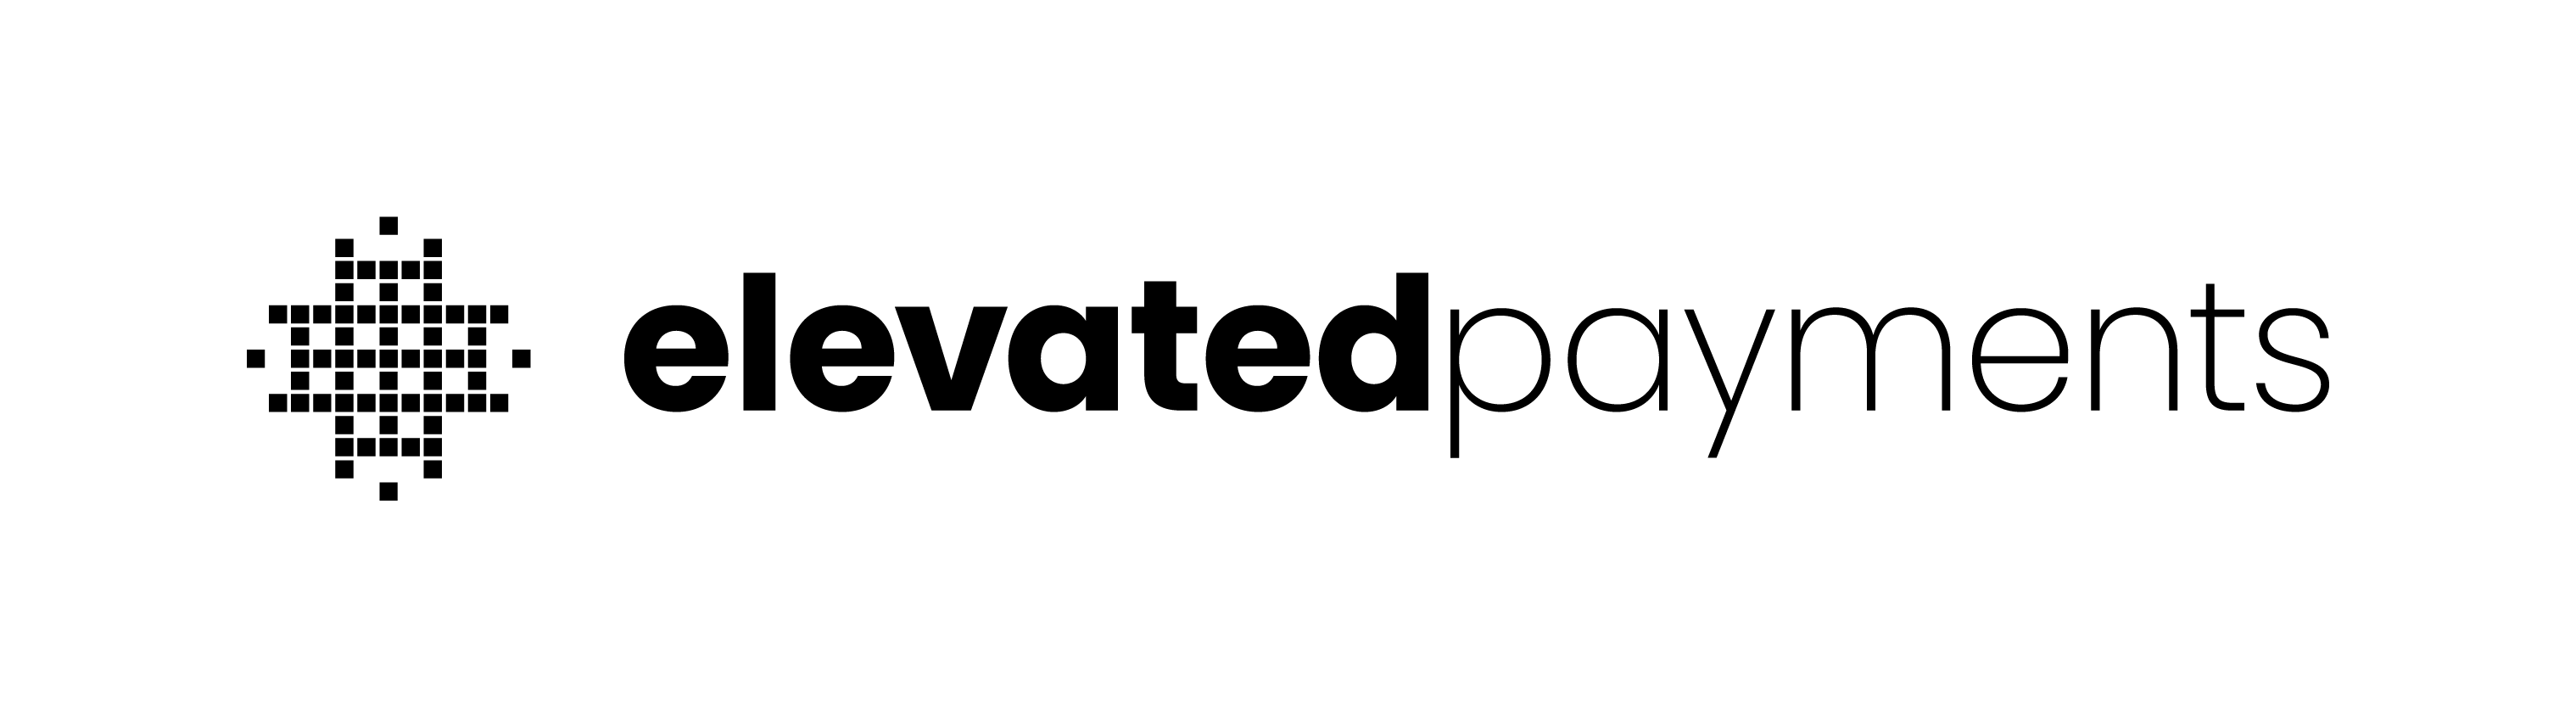 ElevatedPayments_Logo_Horizontal Black